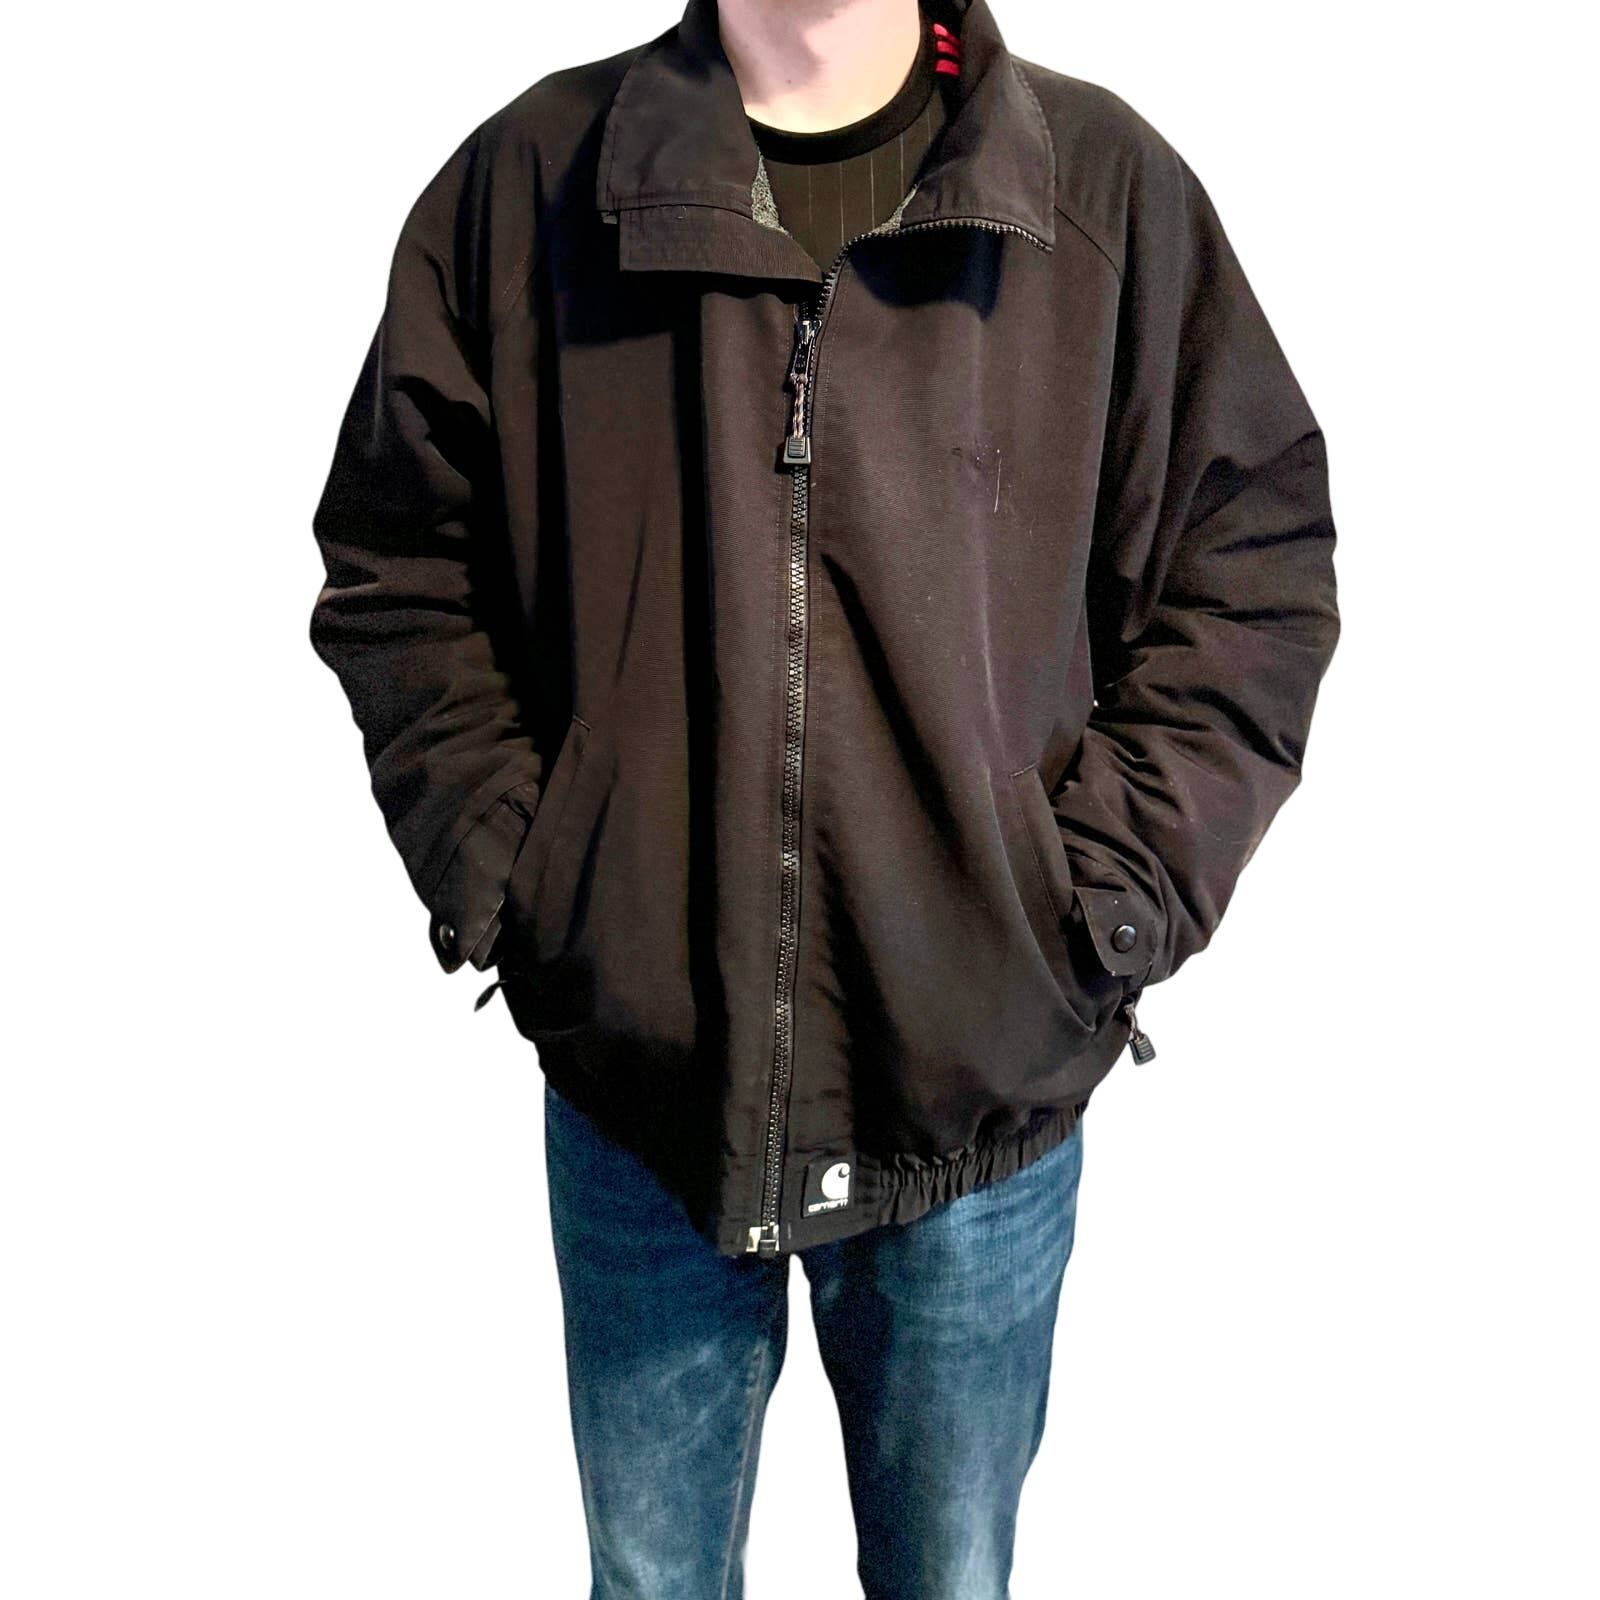 Carhartt Vintage Carhartt Workshield Jacket Fleece Lined Black J72 Size US XL / EU 56 / 4 - 2 Preview